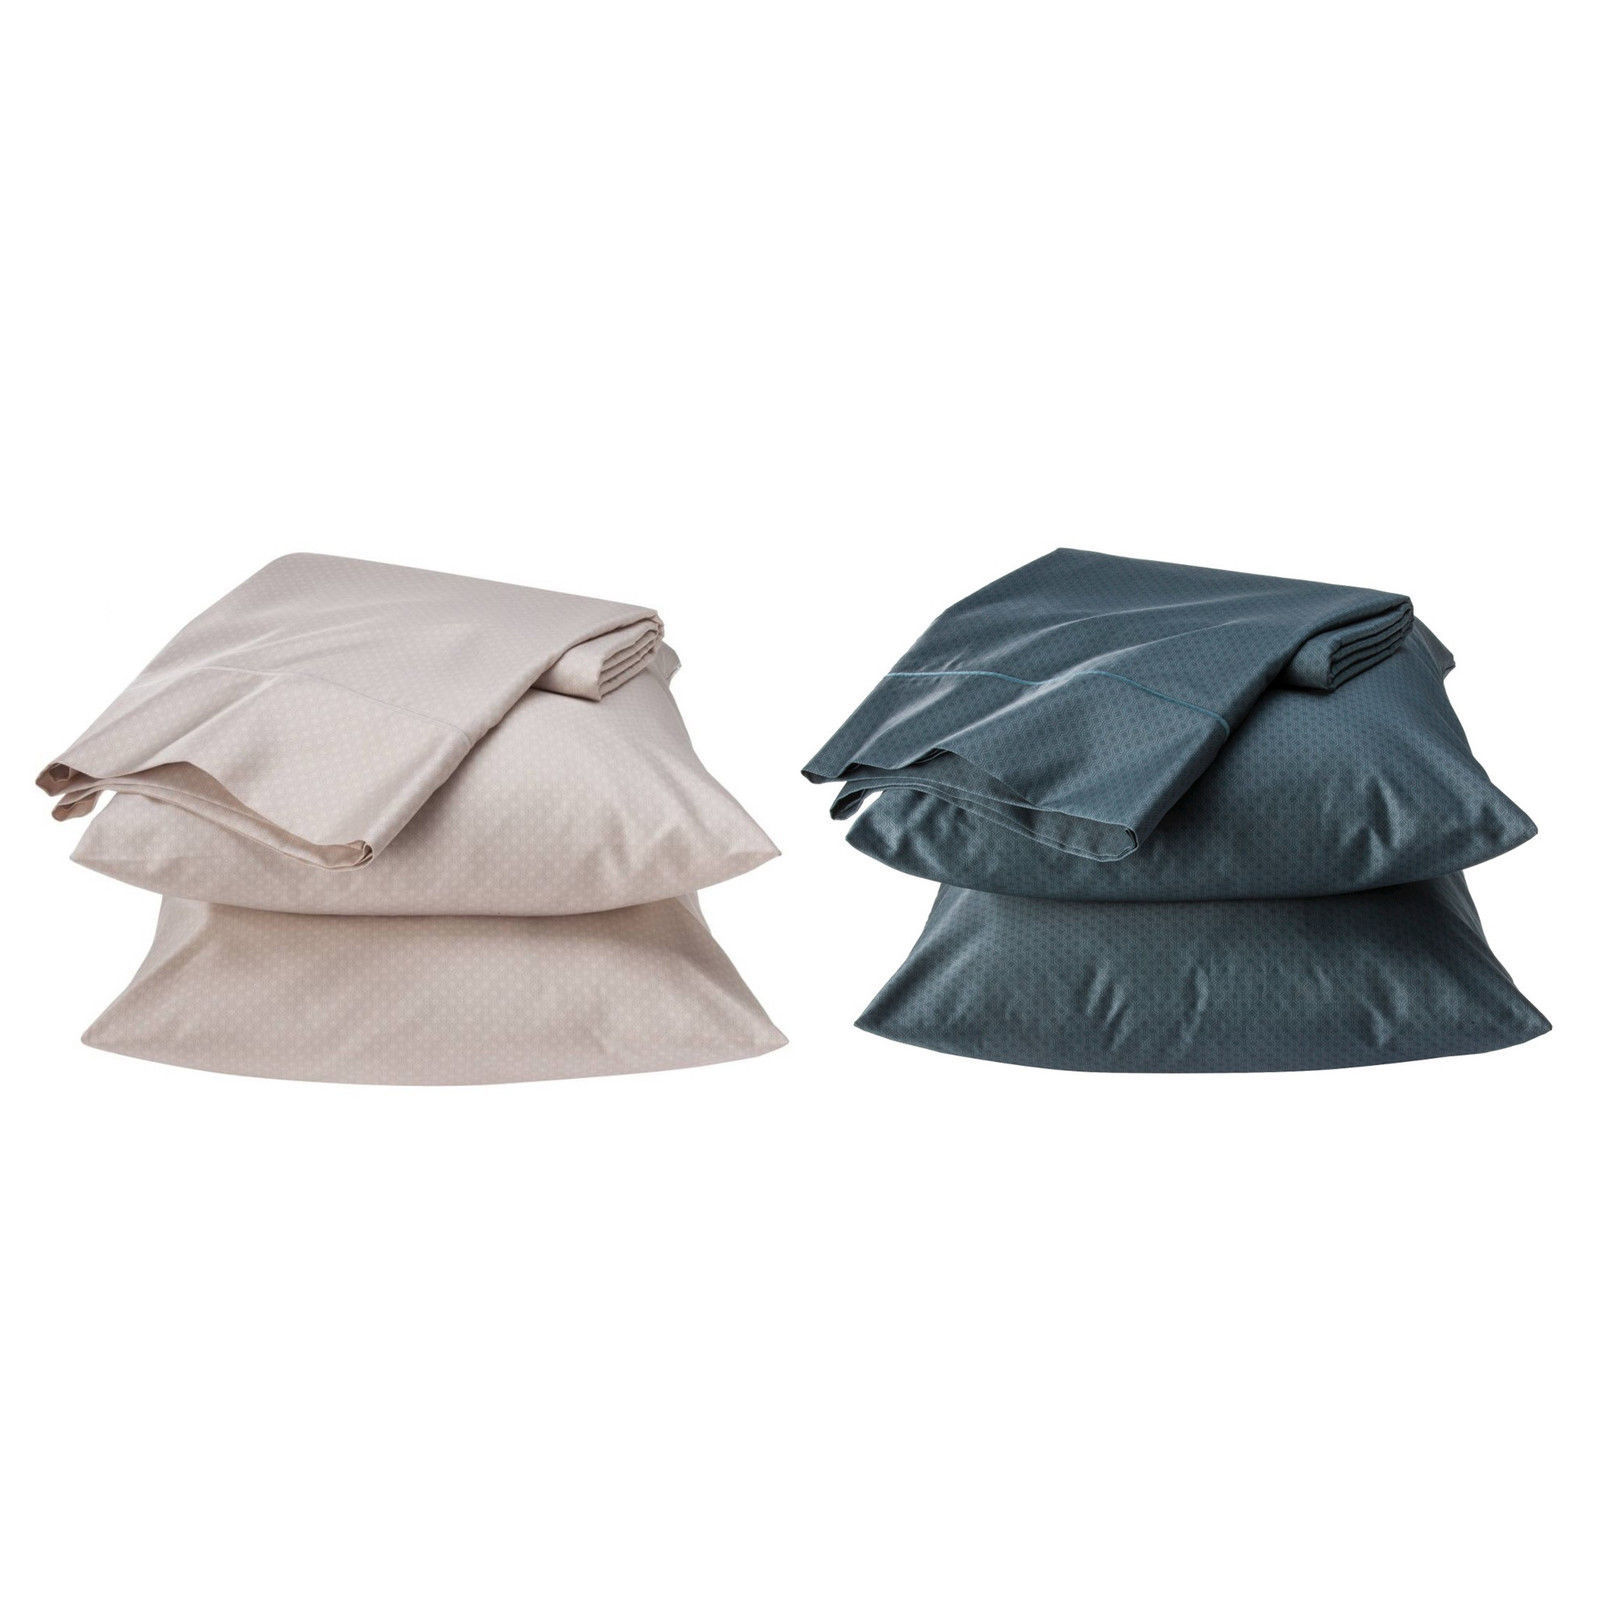 NEW Fieldcrest Luxury Geometry 500 Thread ct 100% Egyption Cotton 2 Pillowcases - $34.99 - $39.99